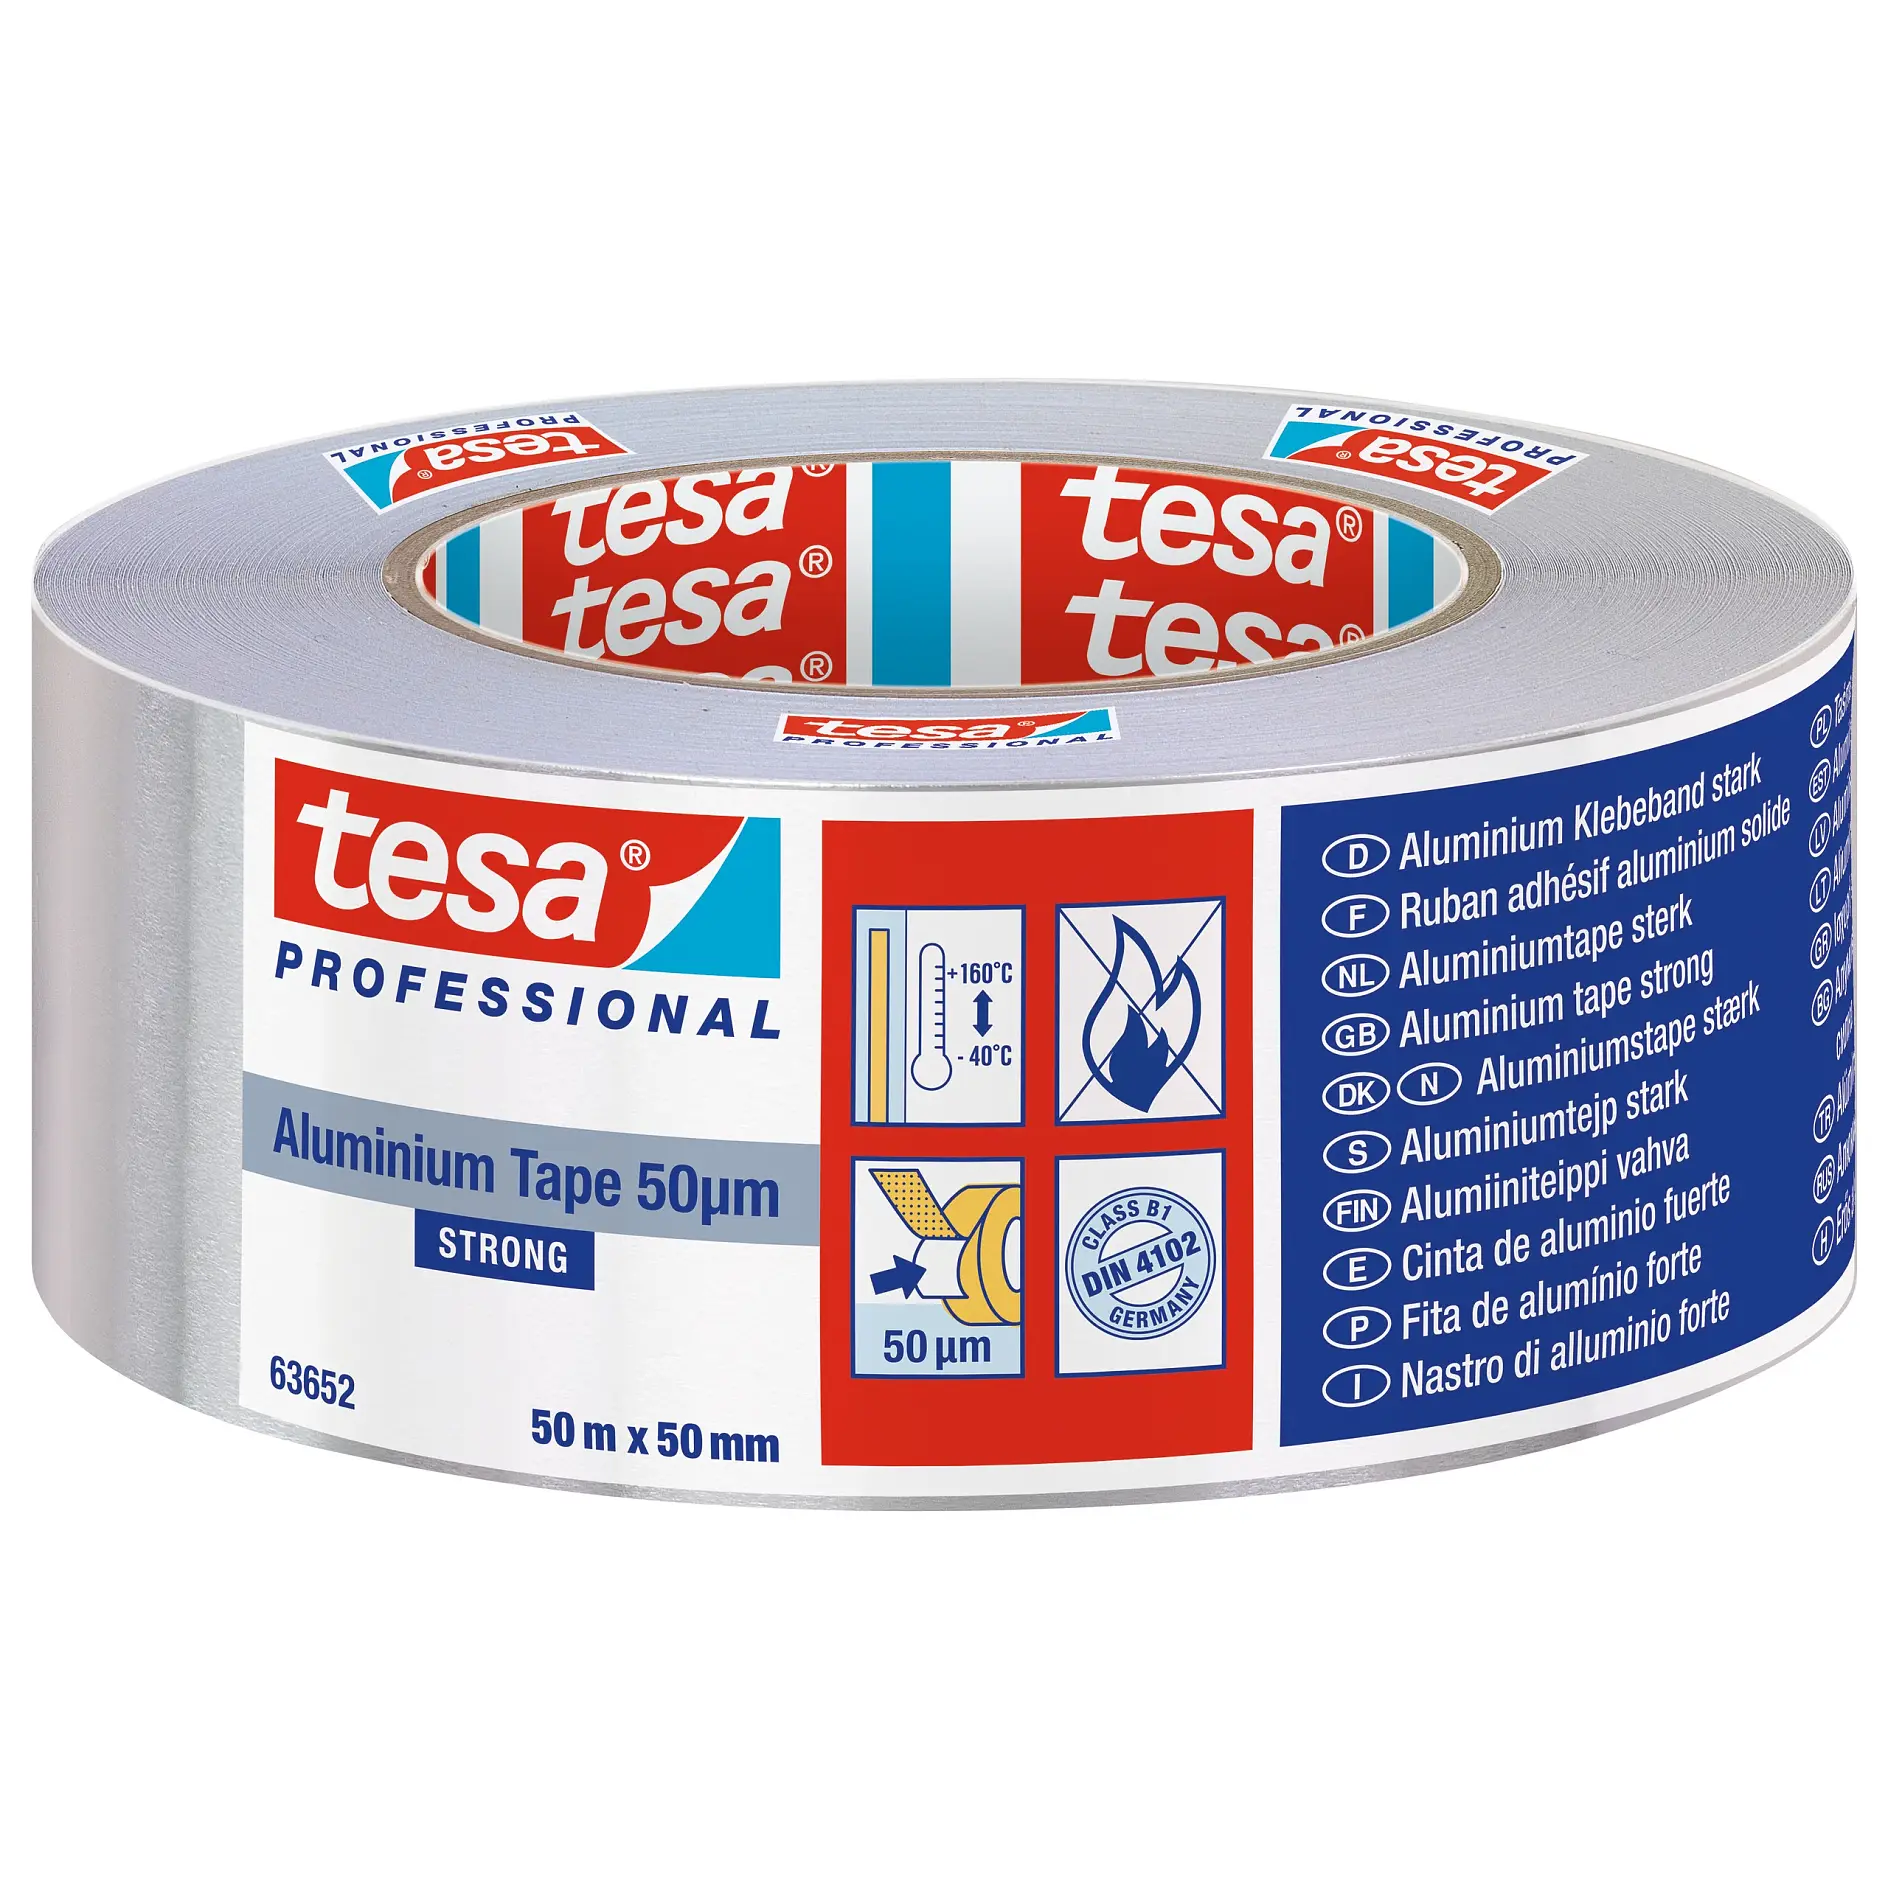 [en-en] tesa Professional Aluminium tape with liner, 50m x 50mm